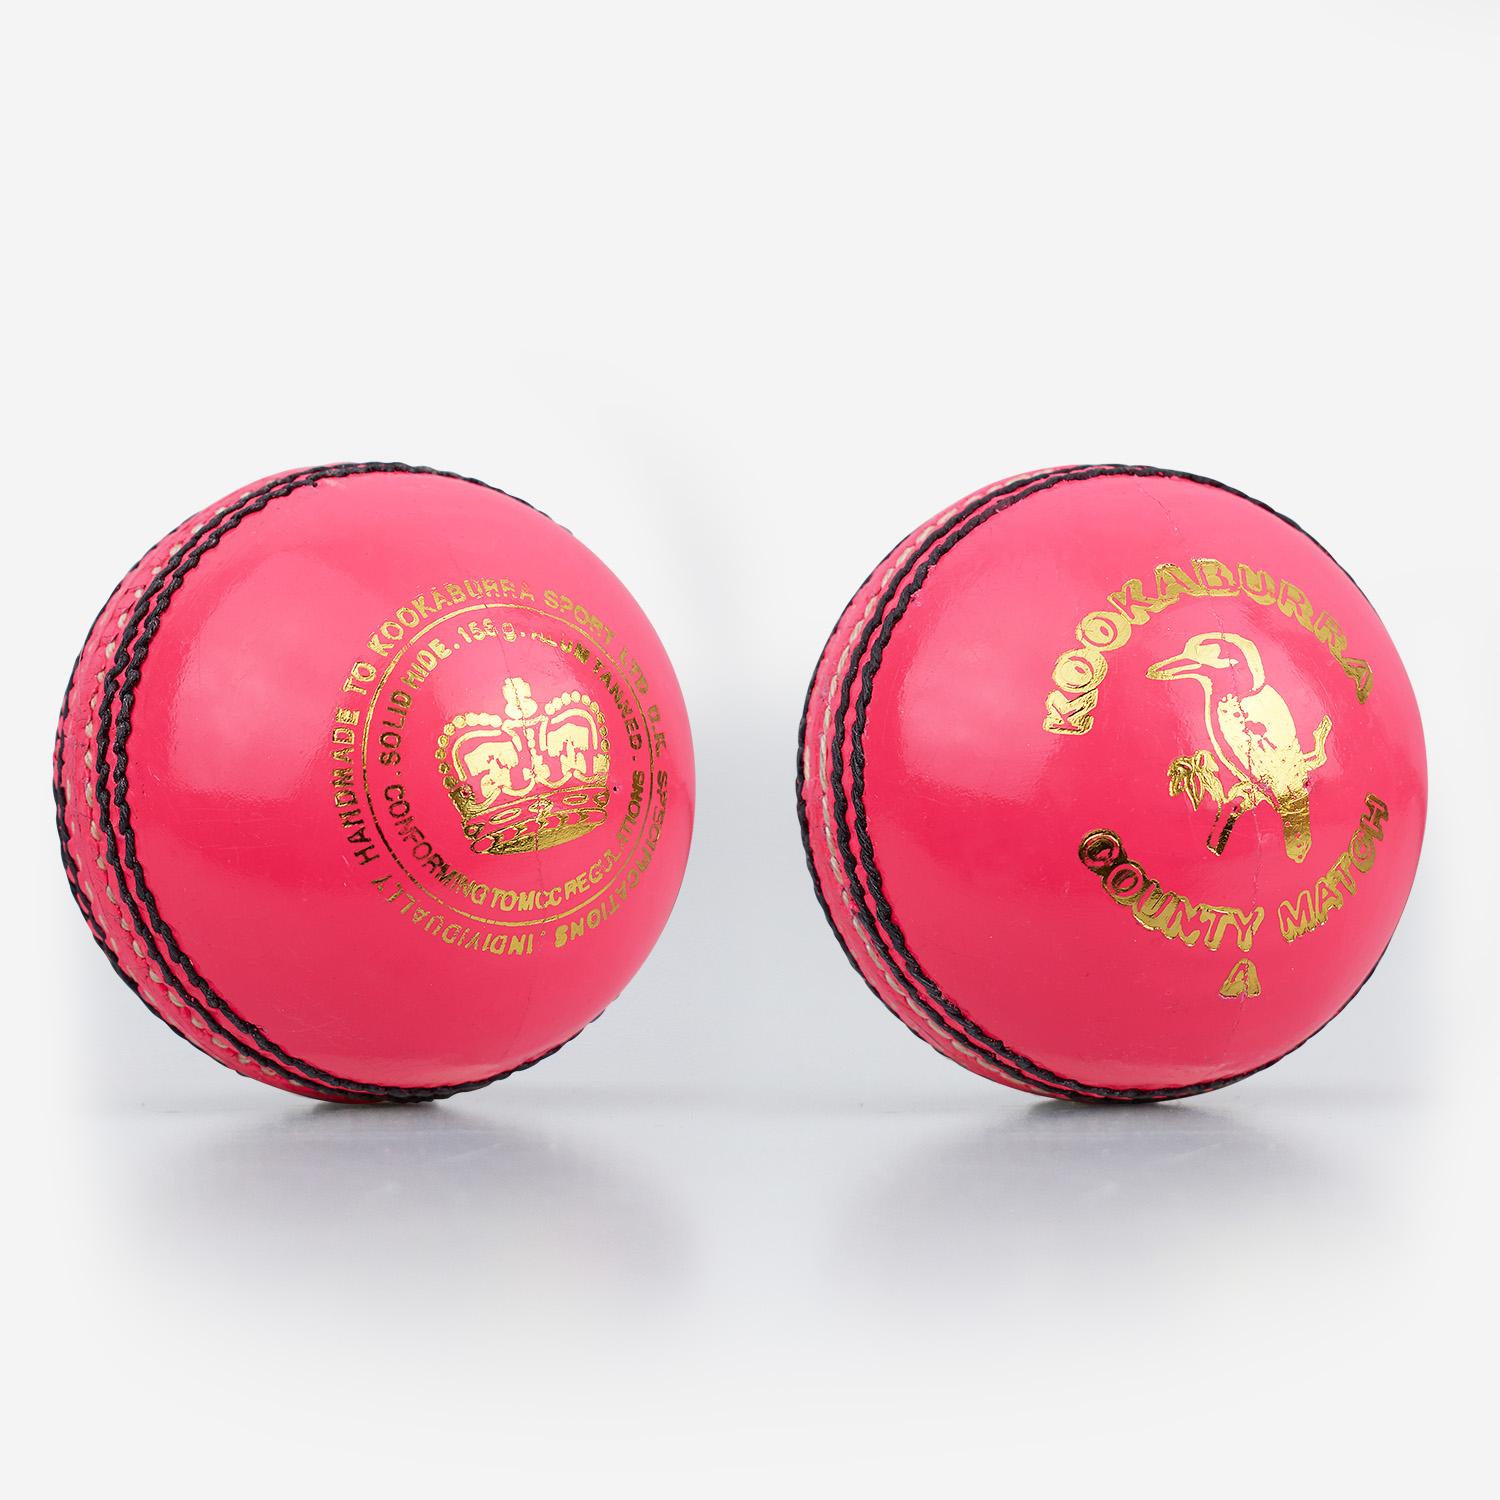 Kookaburra County Match Cricket Ball Pink